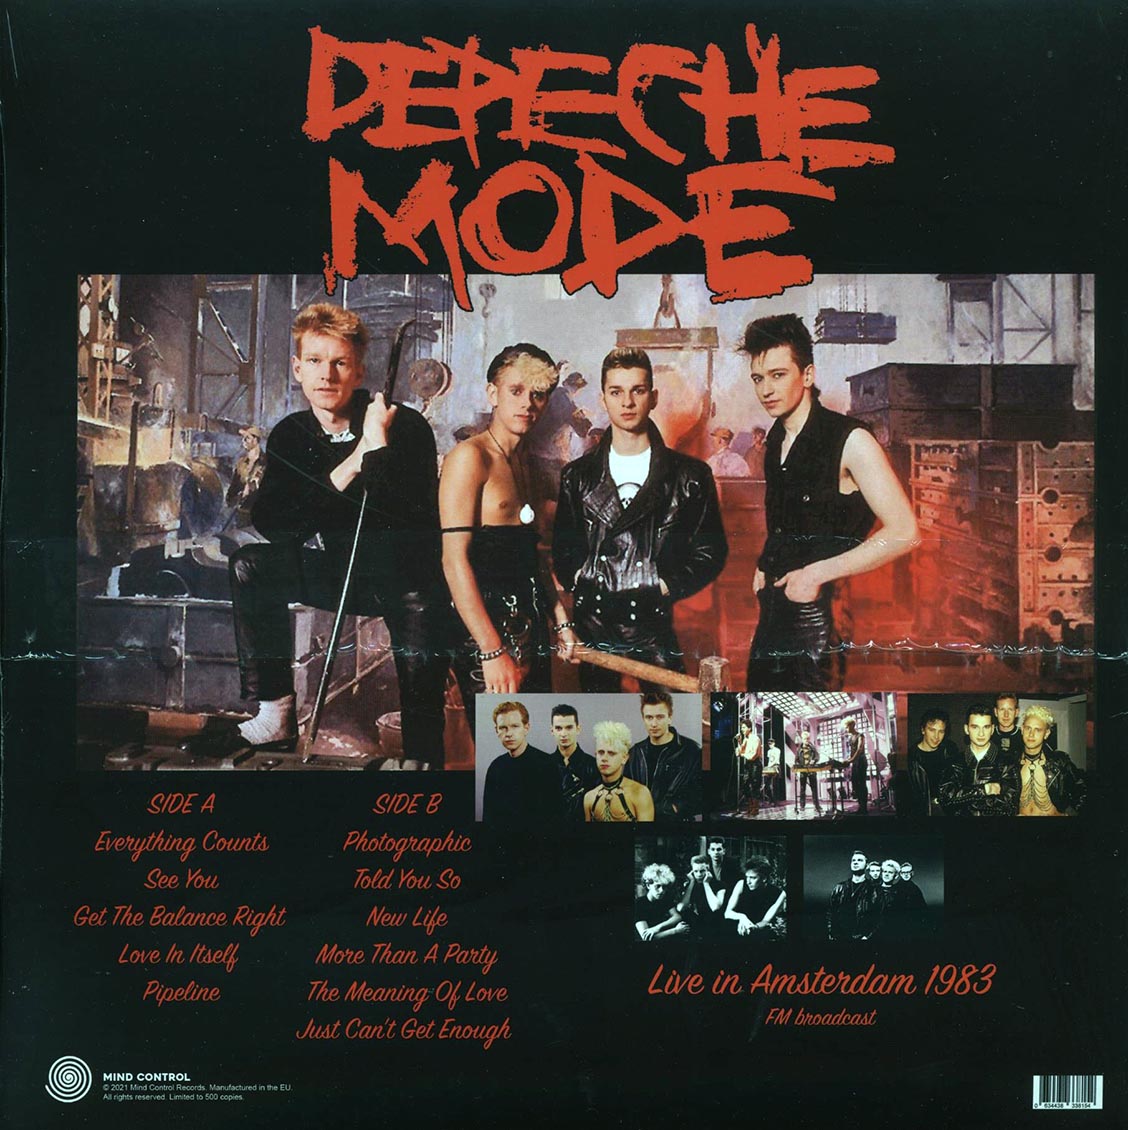 Depeche Mode - More Than A Party In Amsterdam: Live 1983 FM Broadcast (ltd. 500 copies made) - Vinyl LP, LP